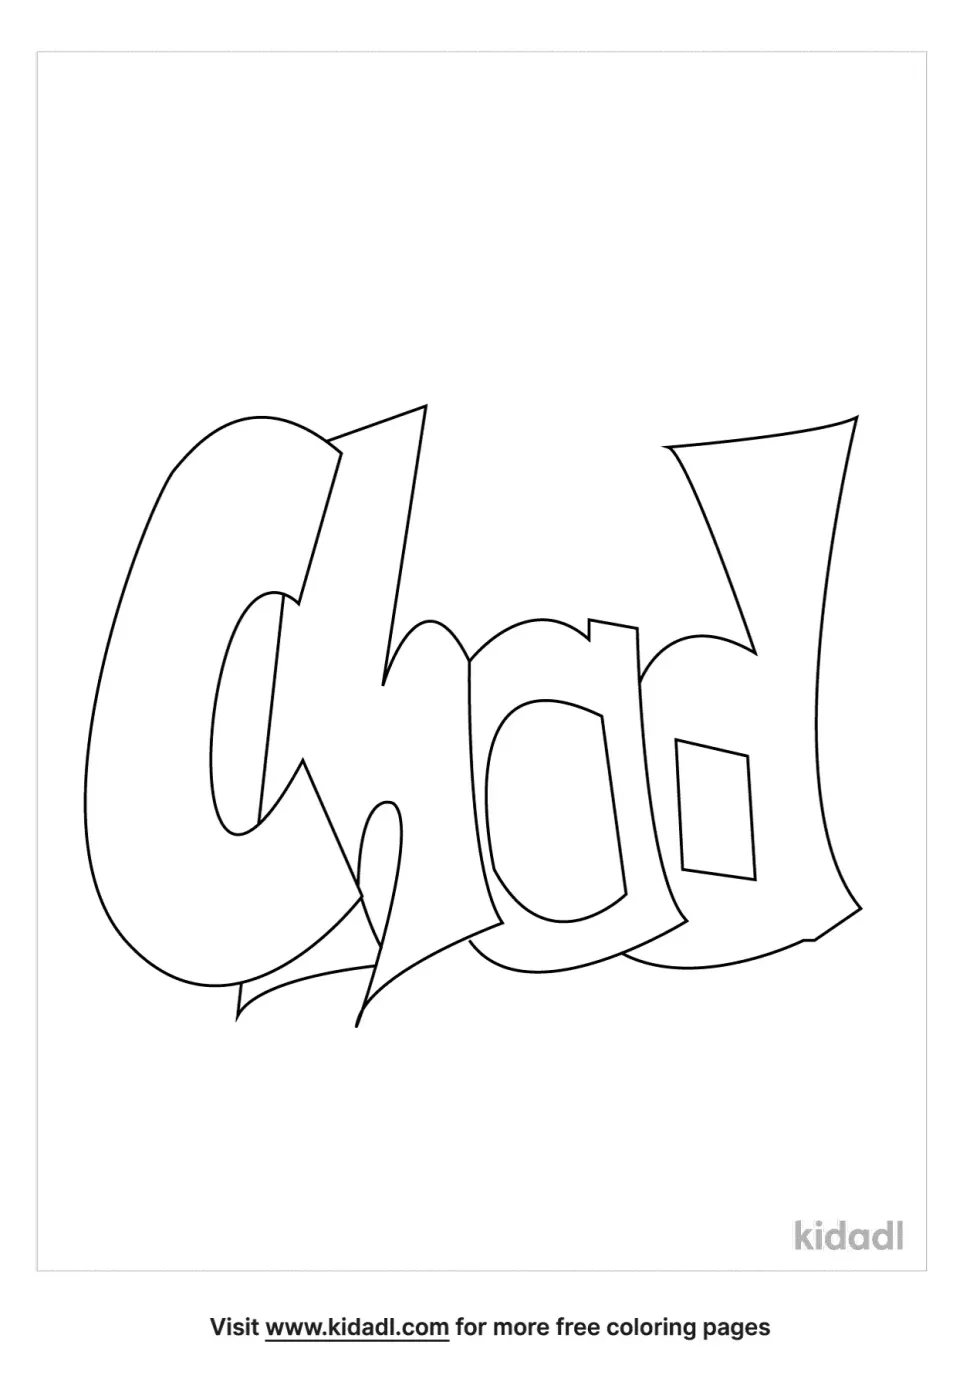 Chad Name